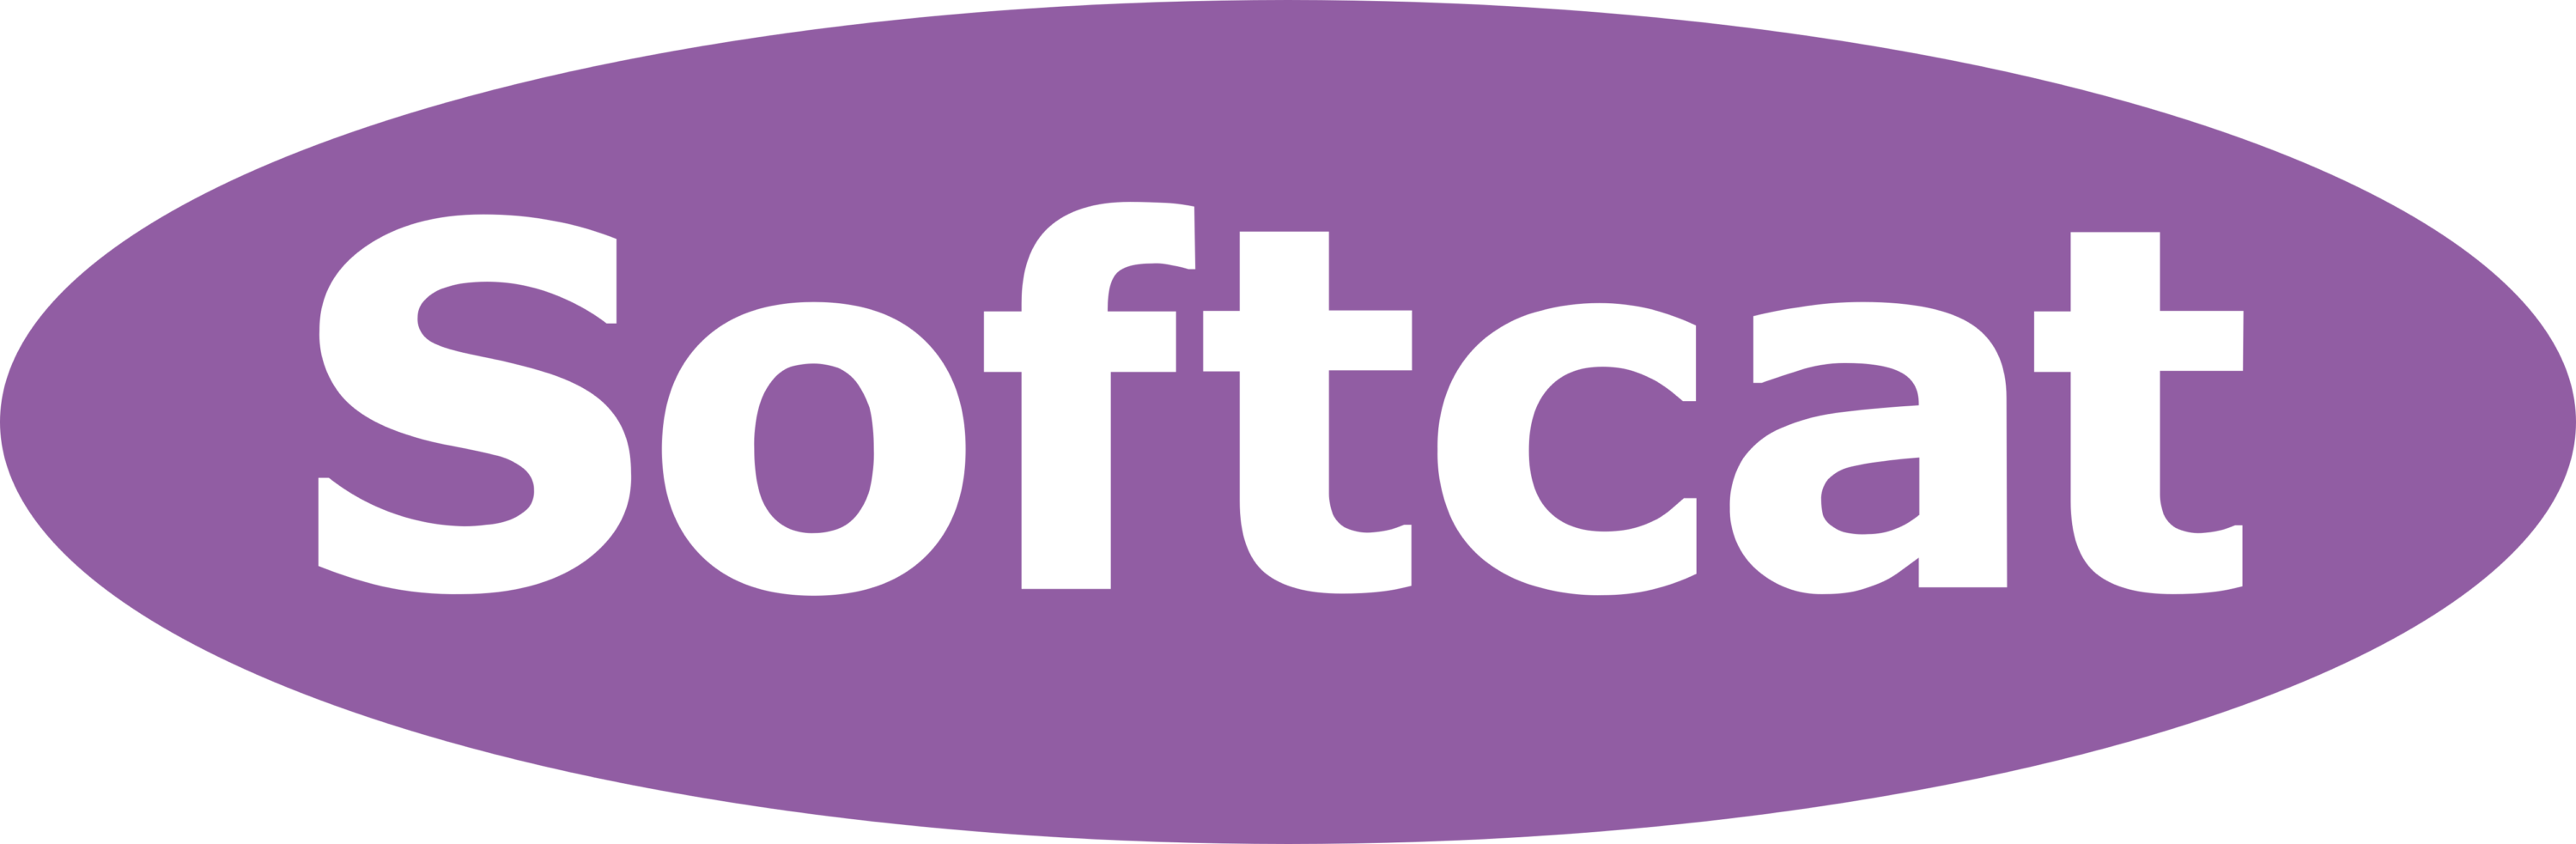 Softcat Logo